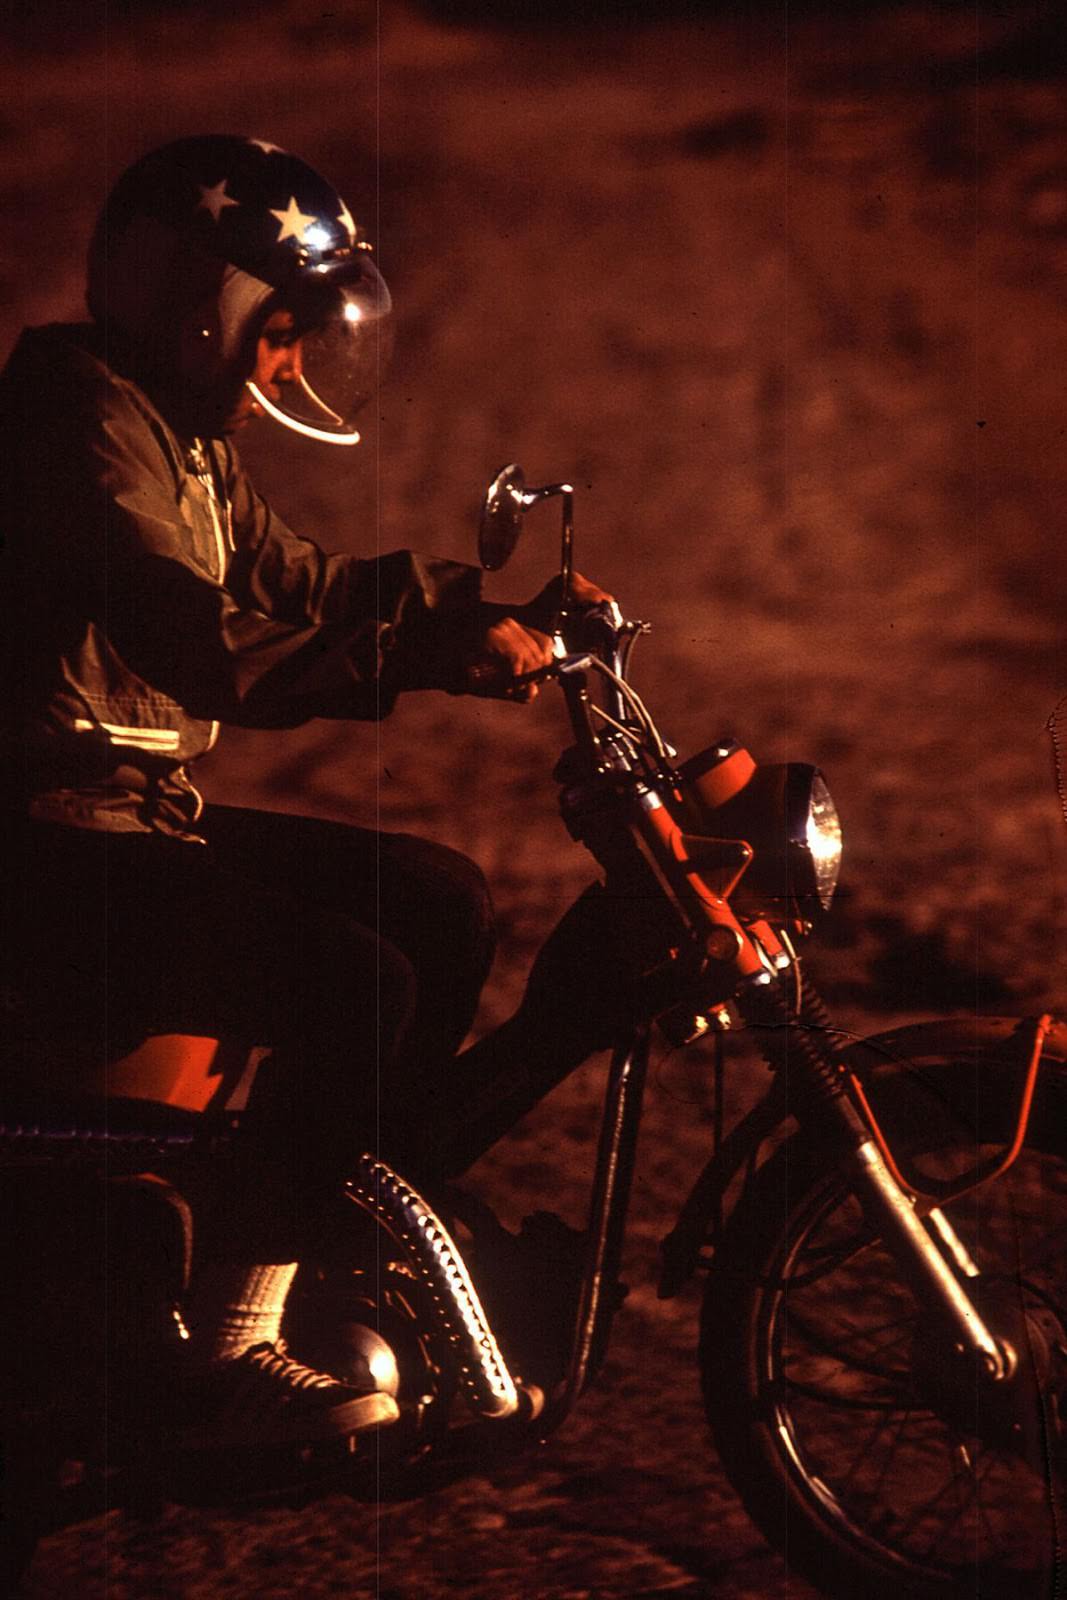 A young Navajo rides a motorcycle in Window Rock, Arizona.